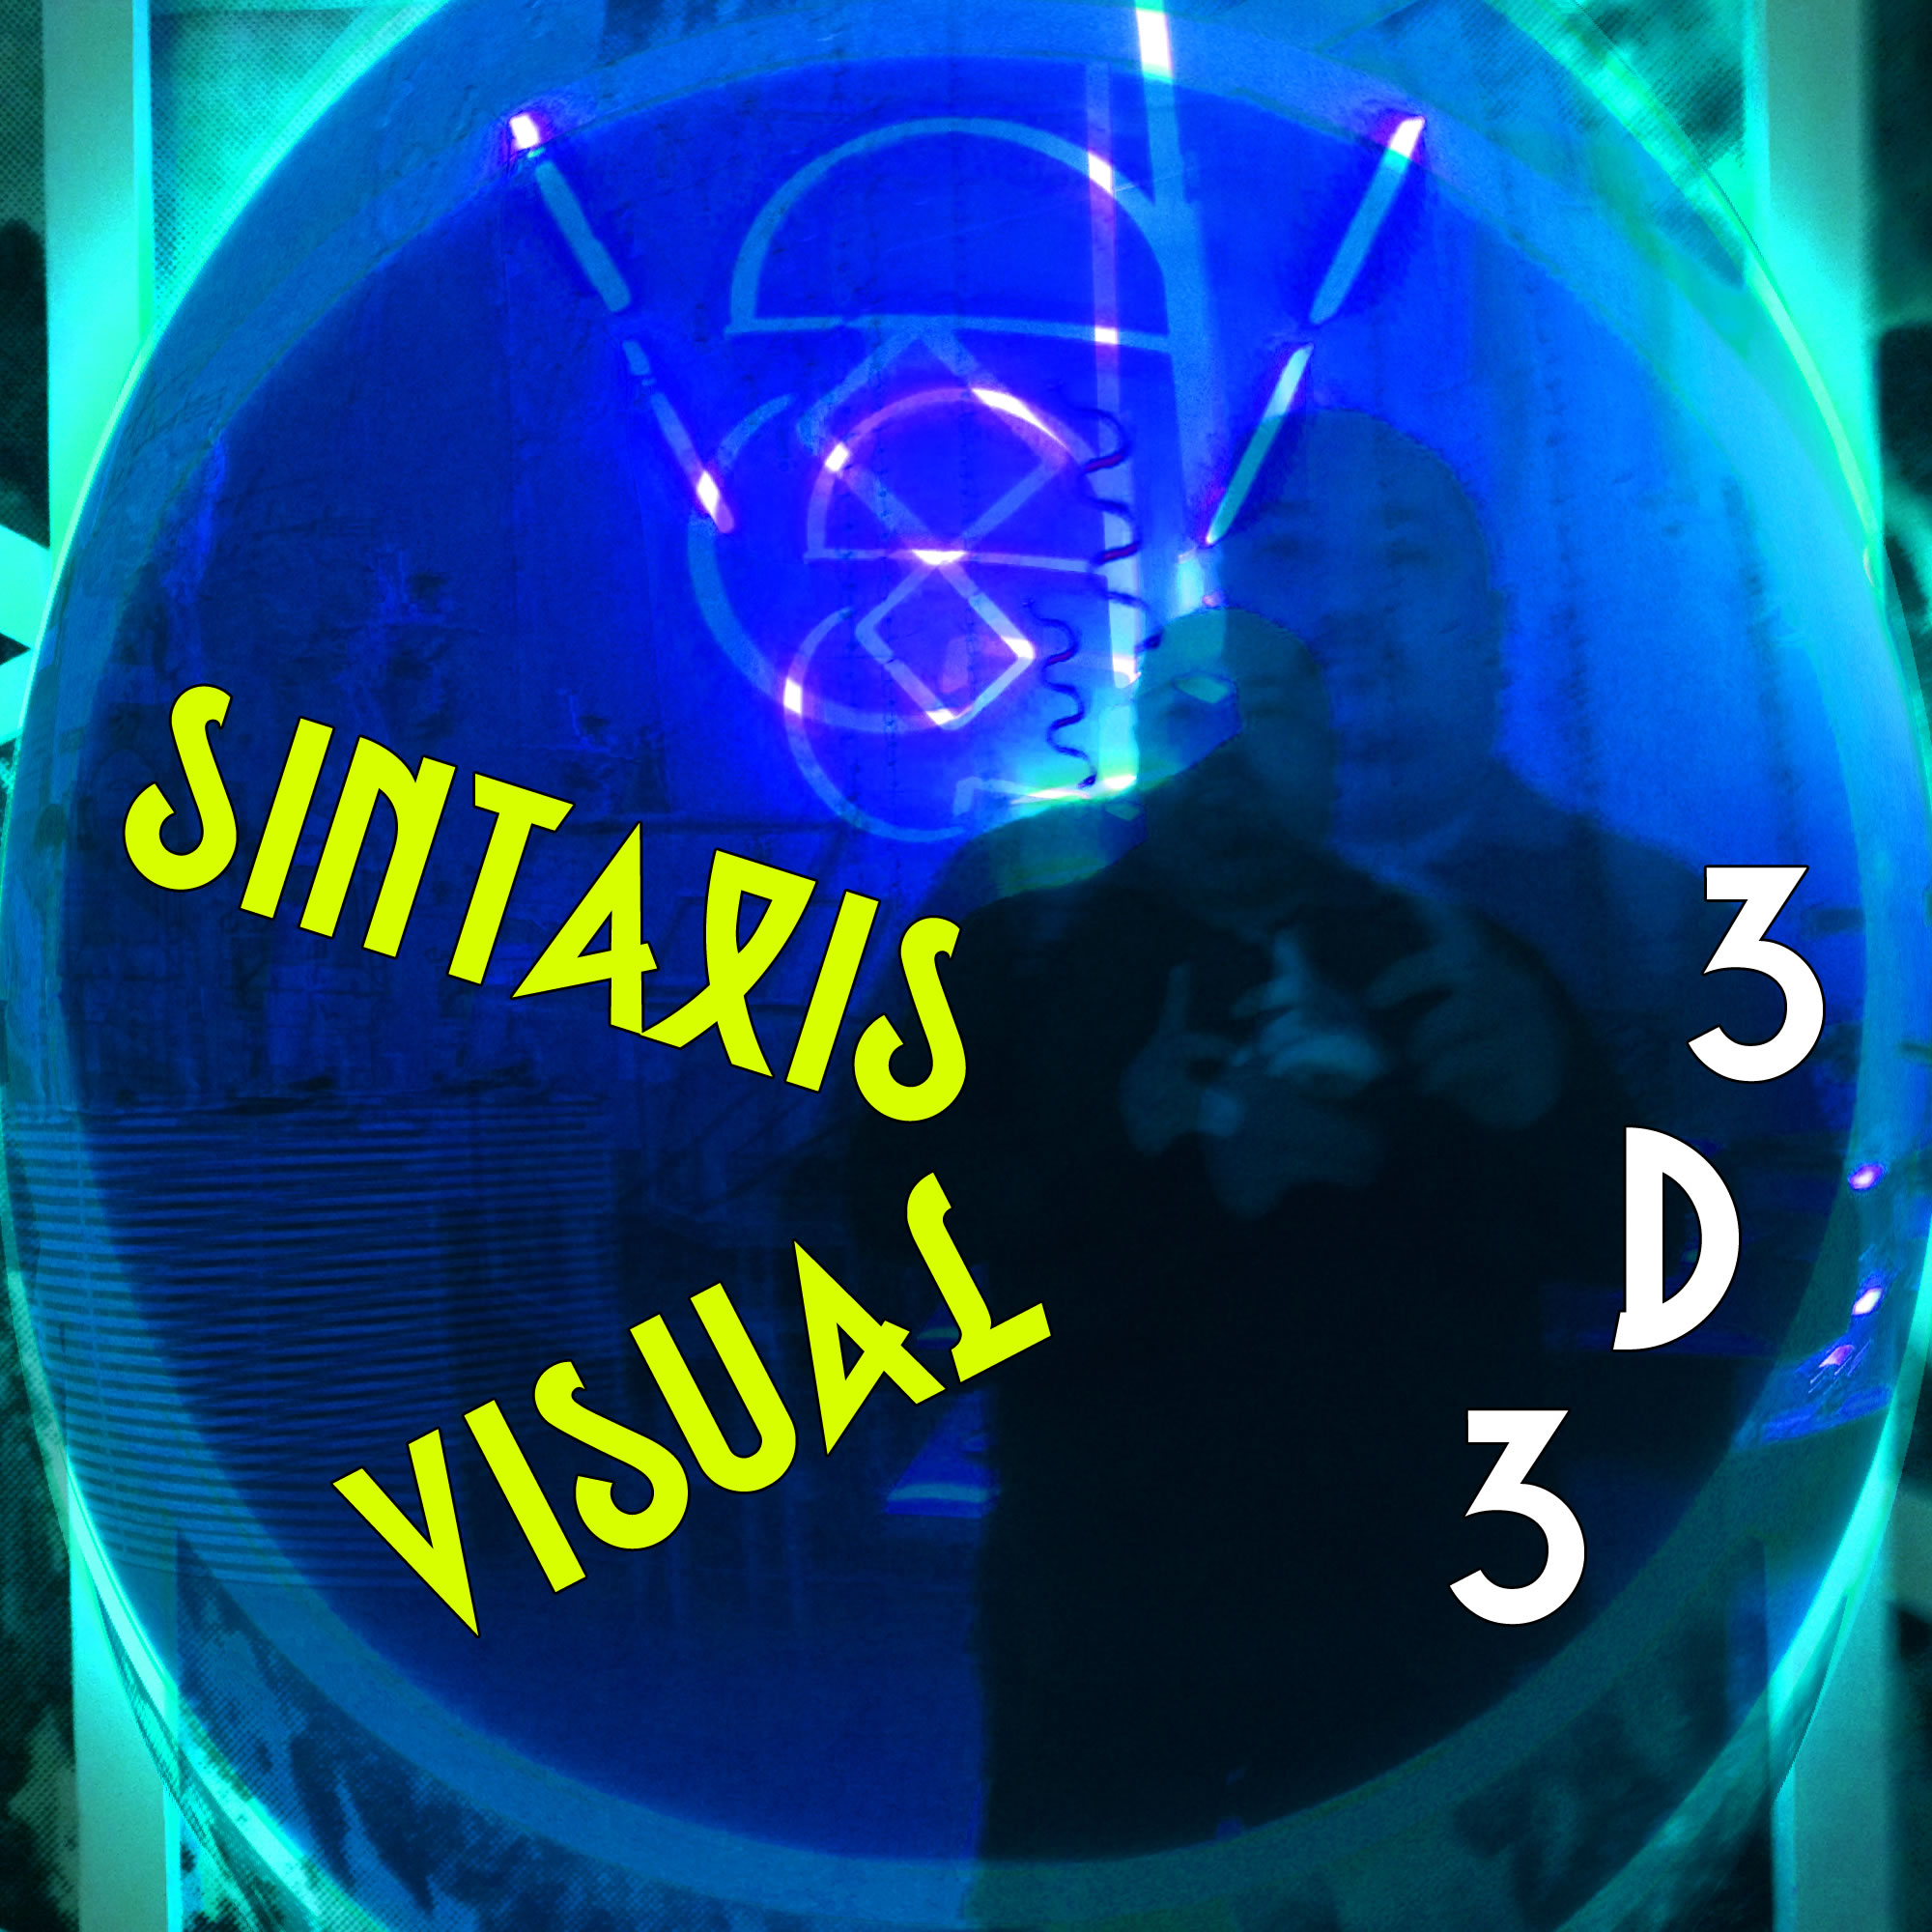 51 - Sintaxis Visual tecnicas de composicion parte 3 de 3